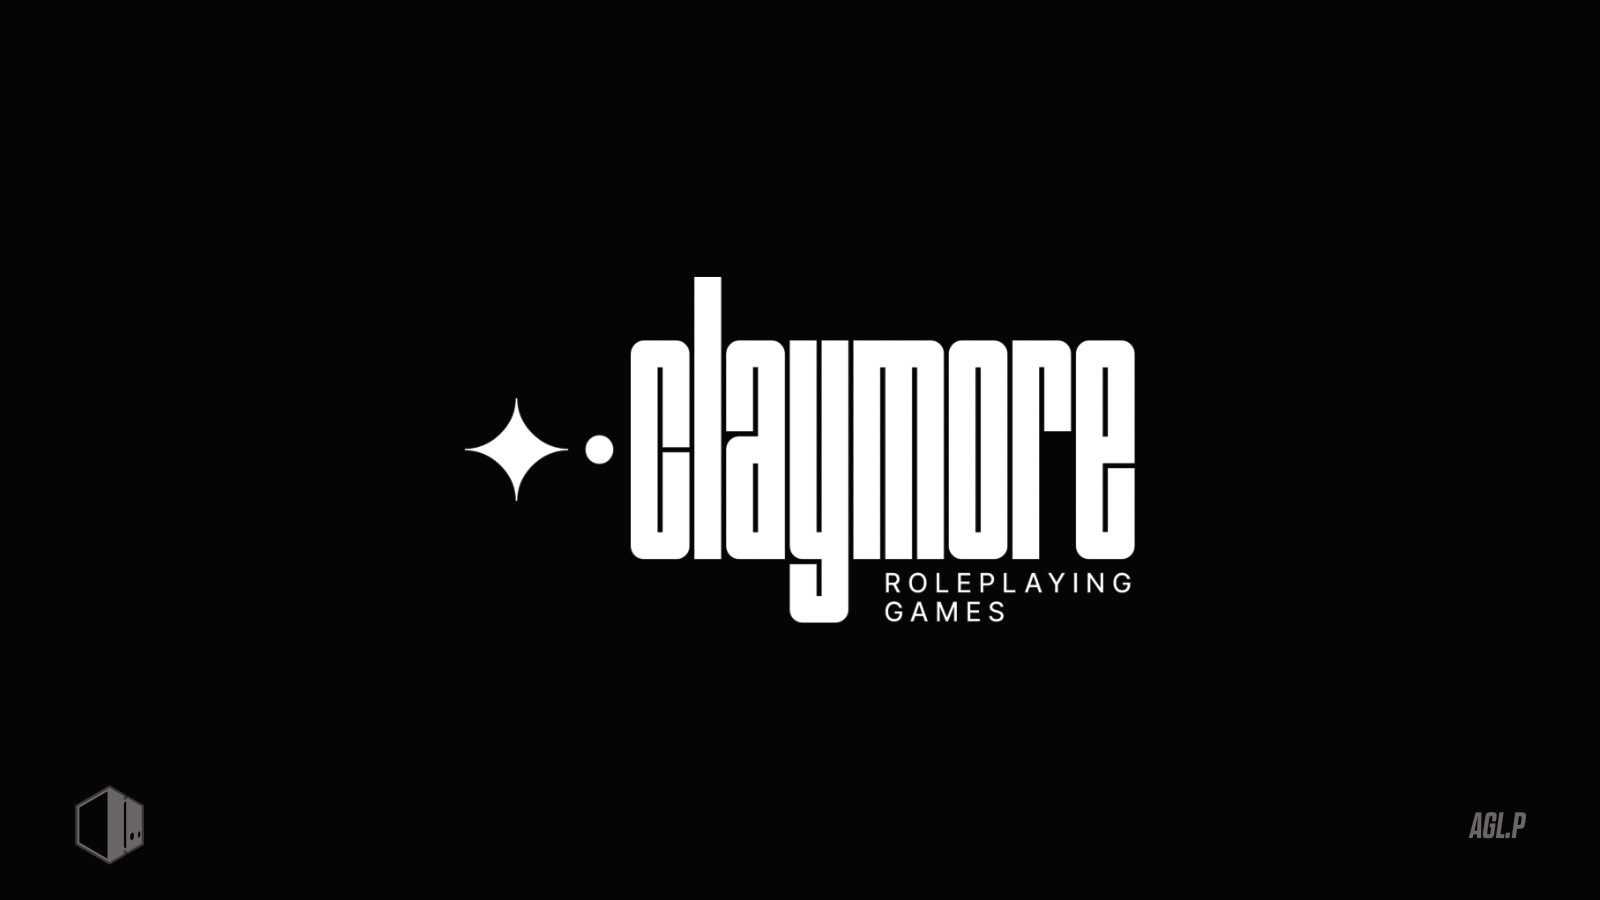 Claymore Games | B. Everett Dutton